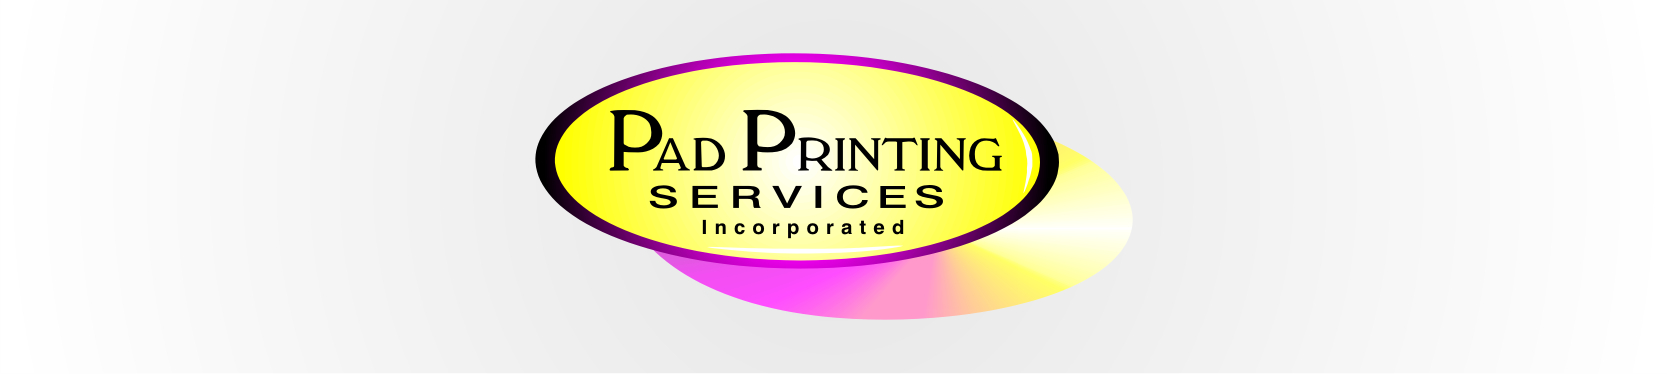 Pad Printing Services Inc.